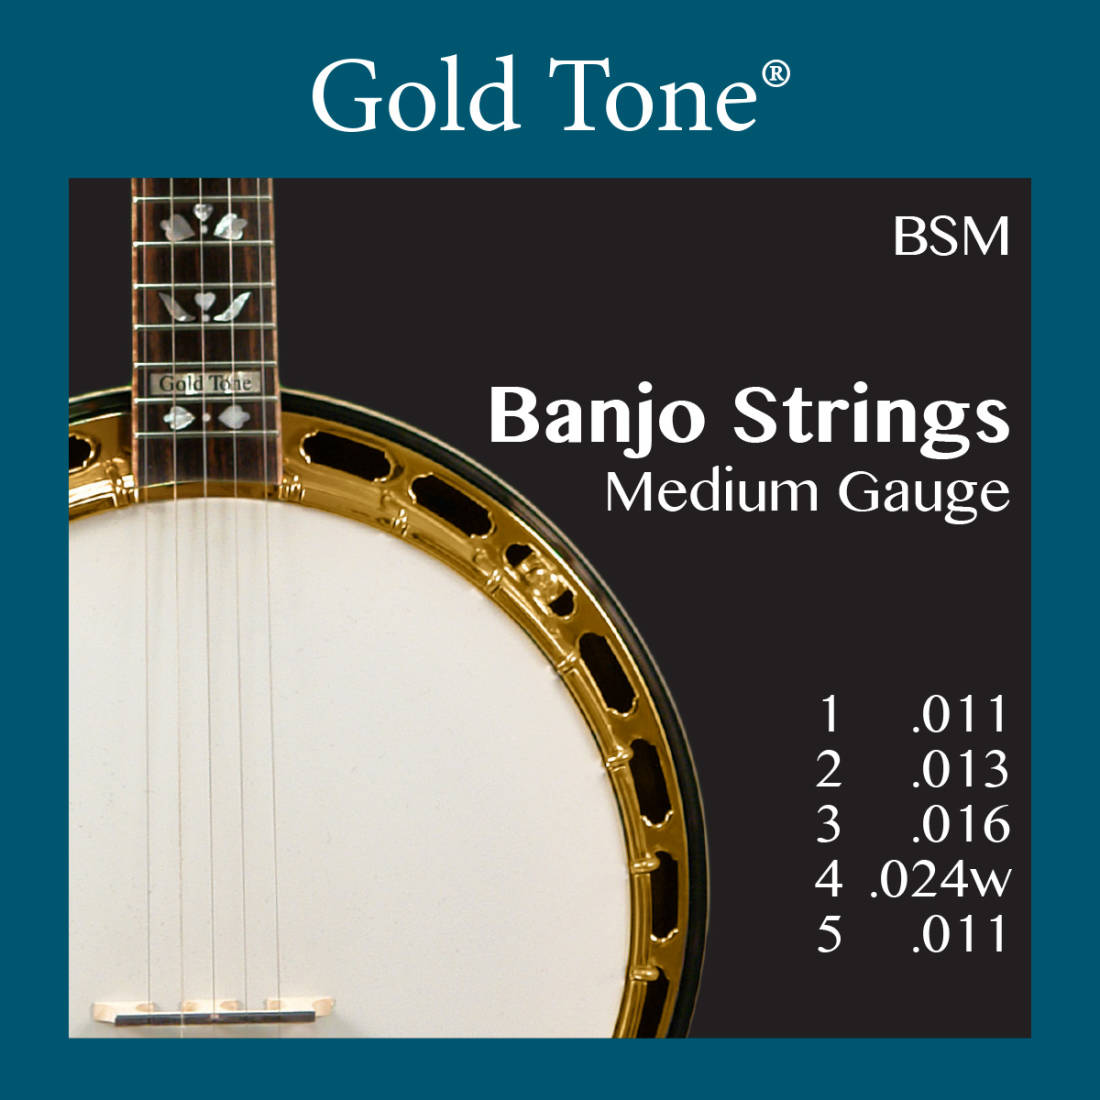 Banjo Strings Medium Gauge